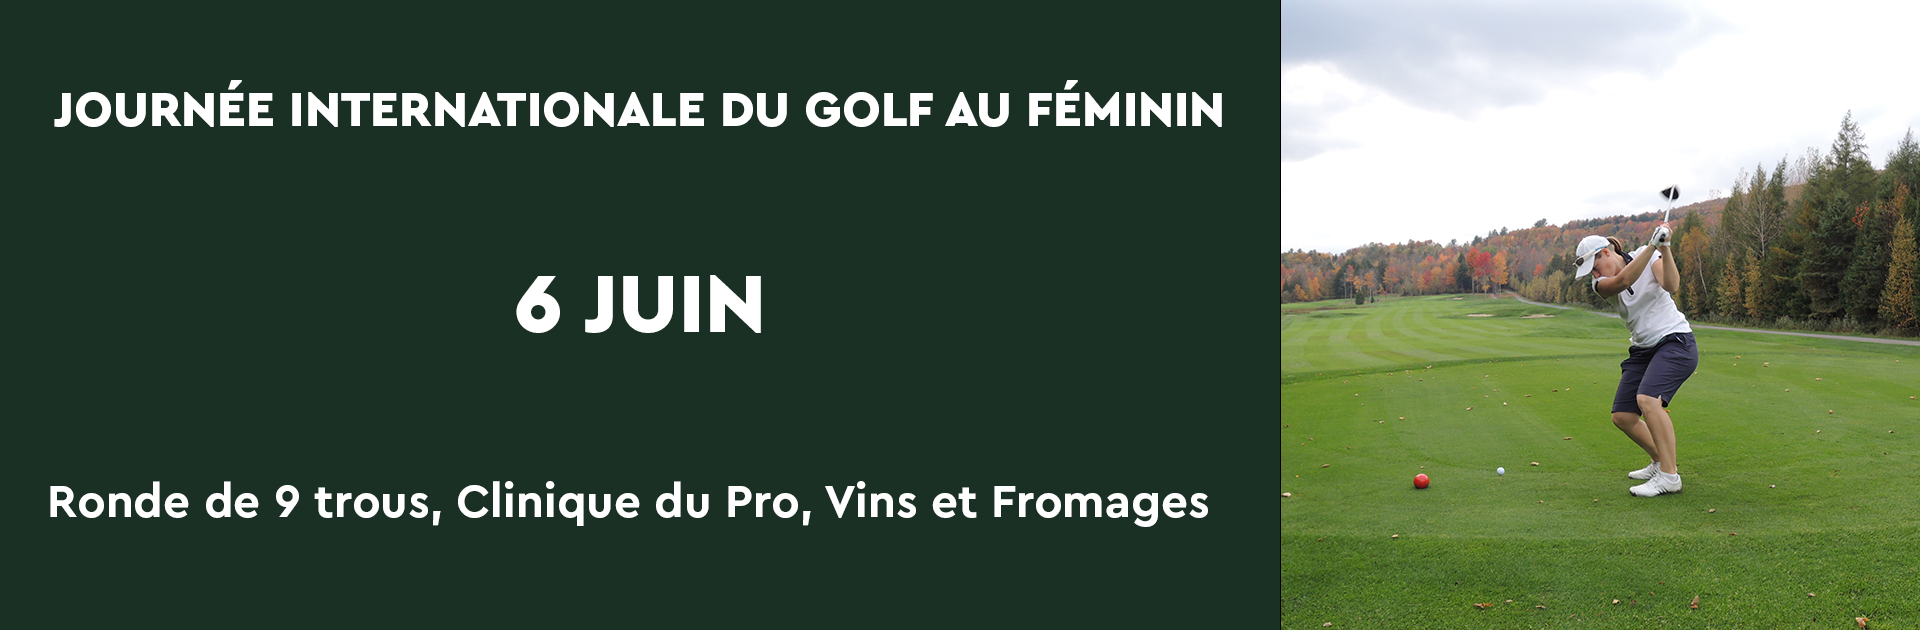 Journée Internationale du Golf au Féminin